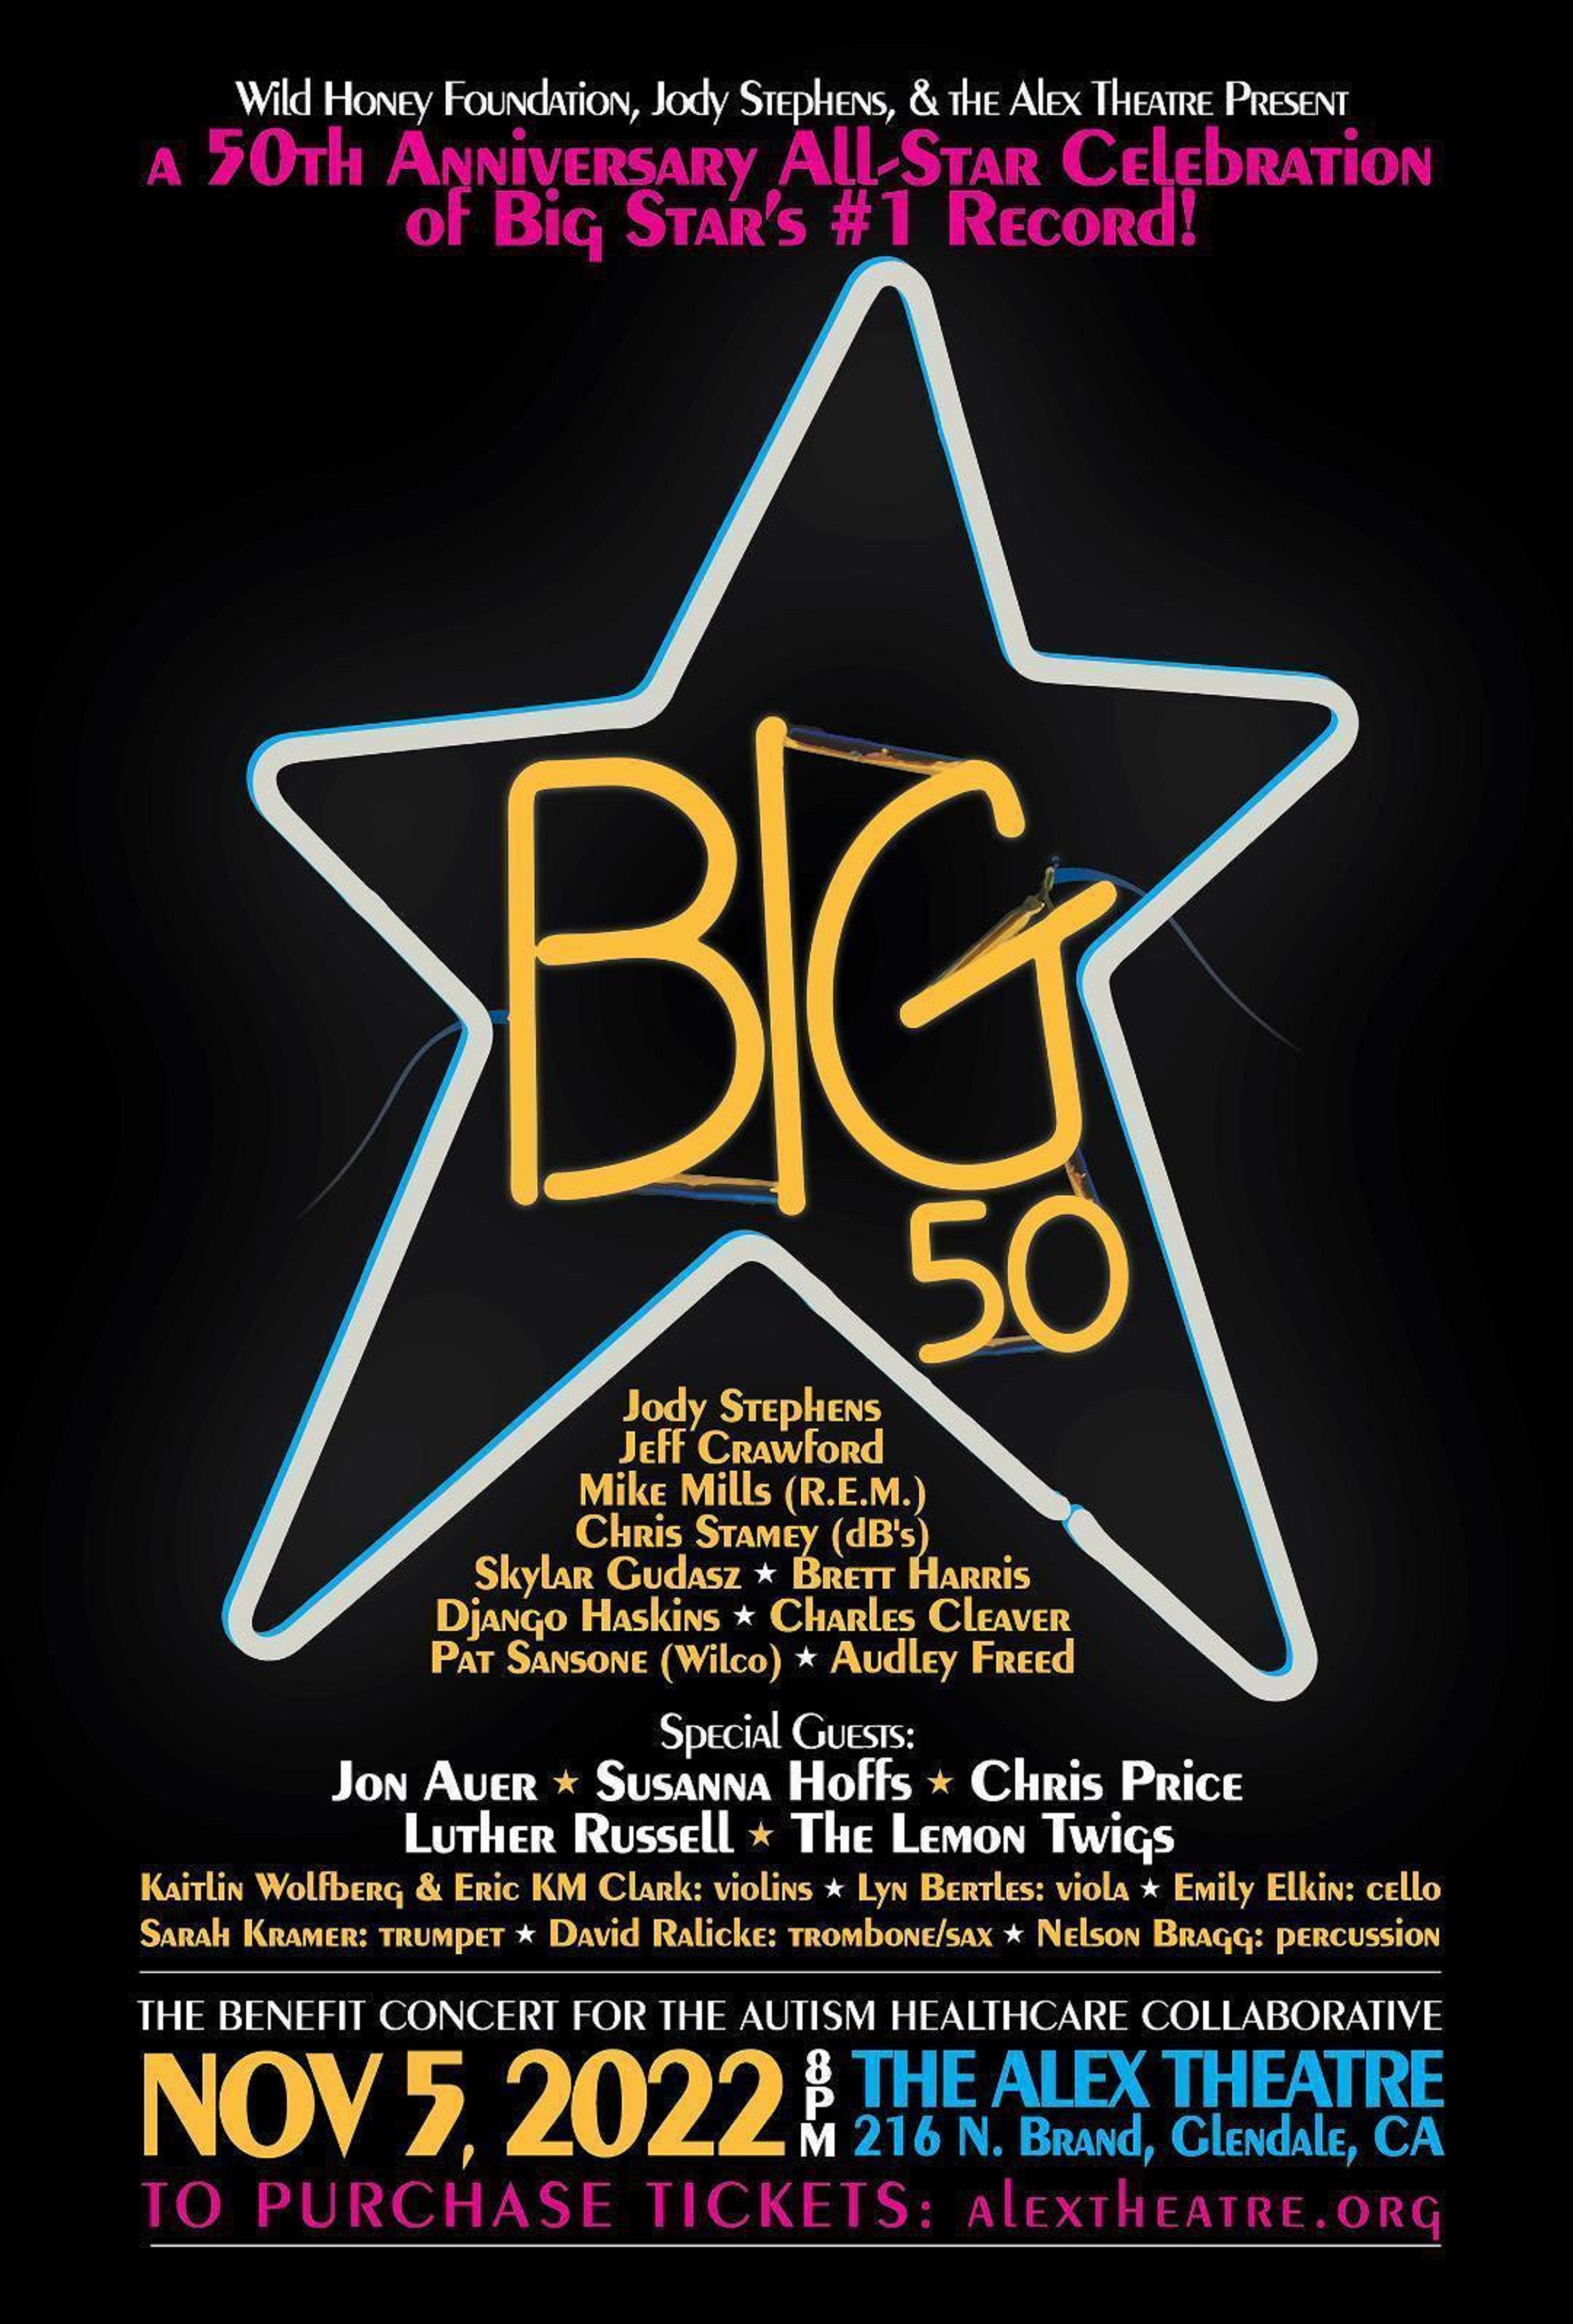 Big Star's '#1 Record' celebrated in Nov. 5th Wild Honey Foundation all-star show